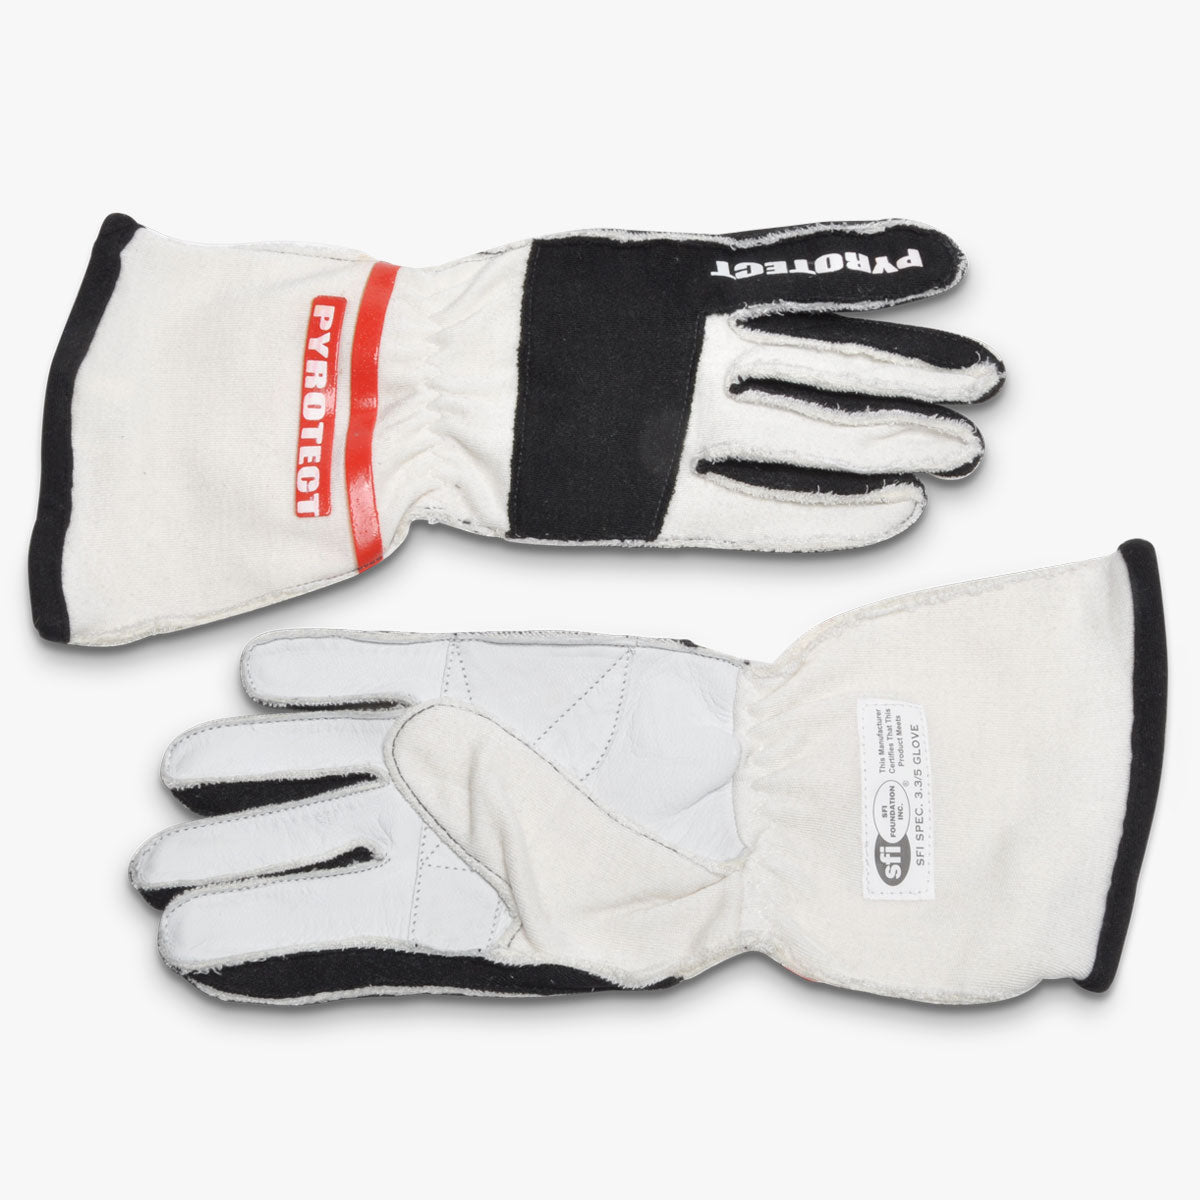 Pyrotect Pro Reverse Stitch 2 Layer SFI-5 Gloves